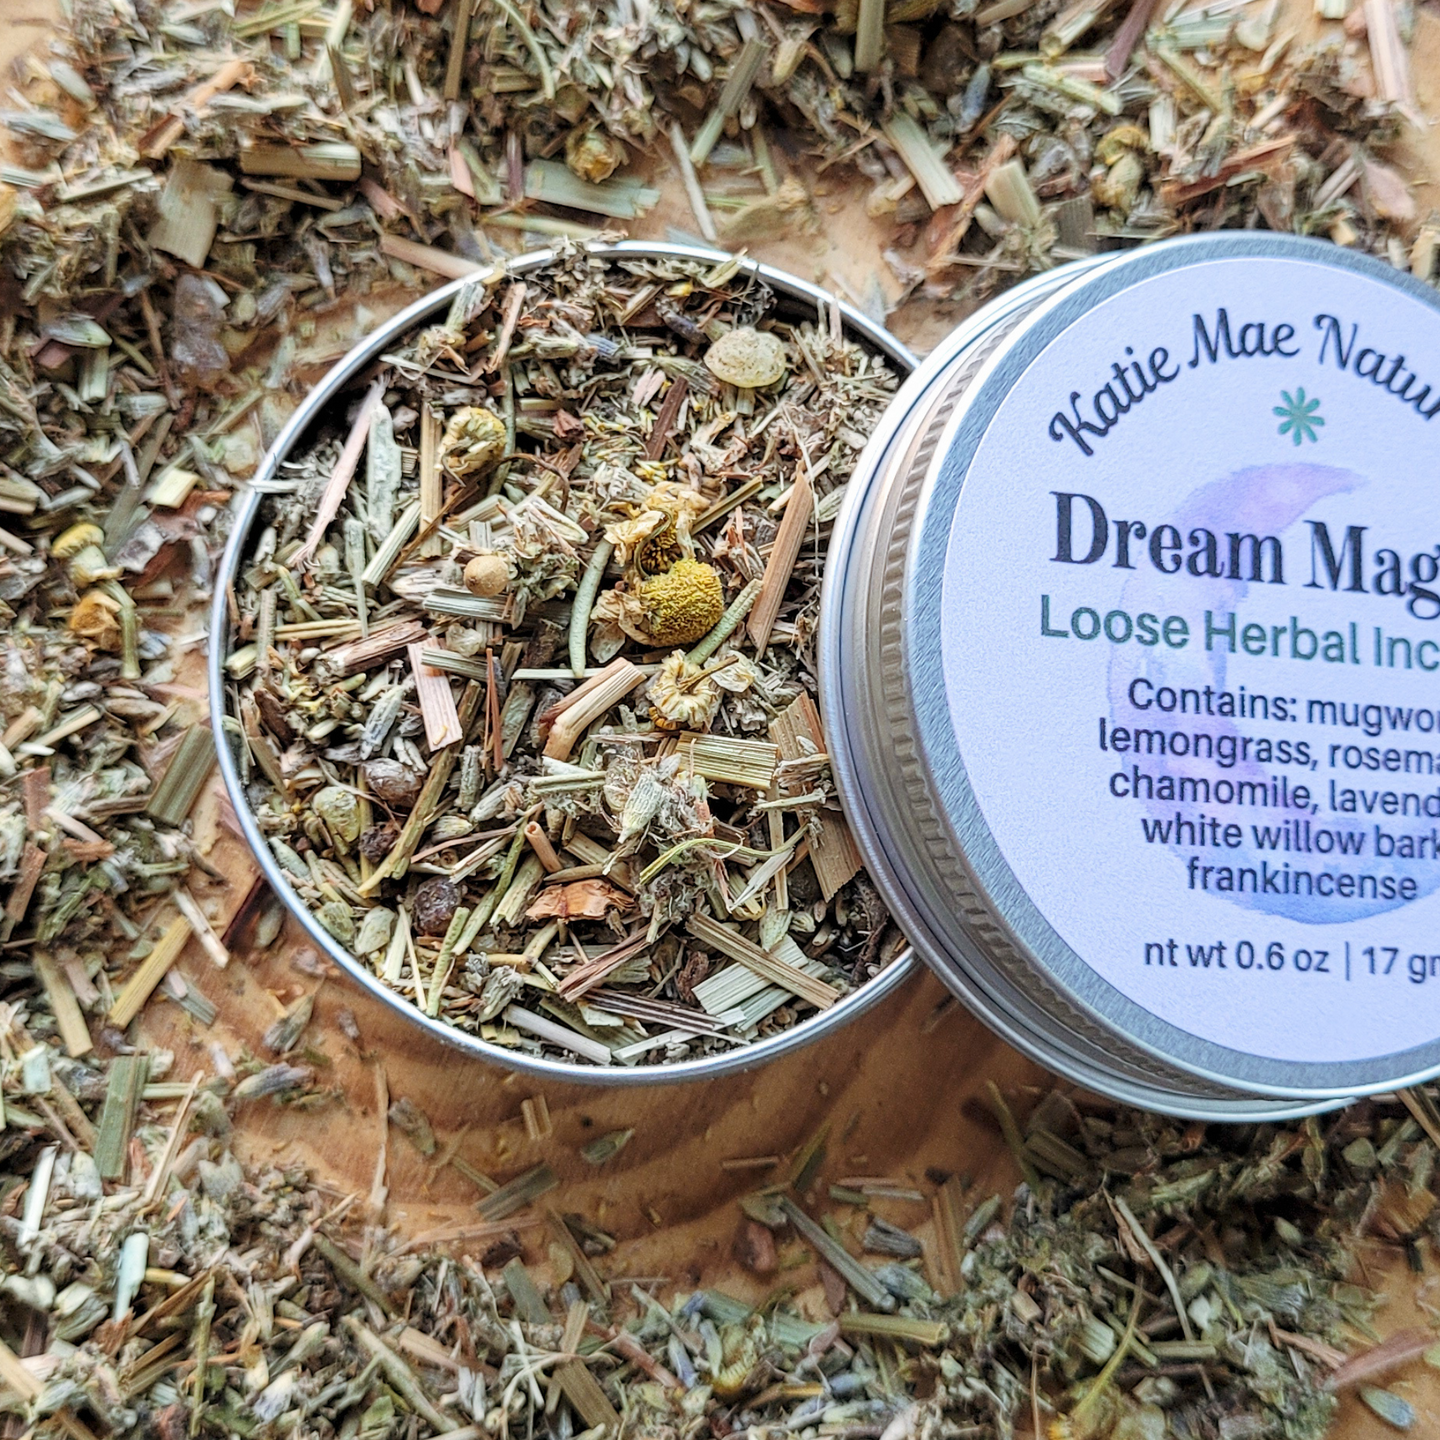 Loose herbal incense with mugwort for dreams